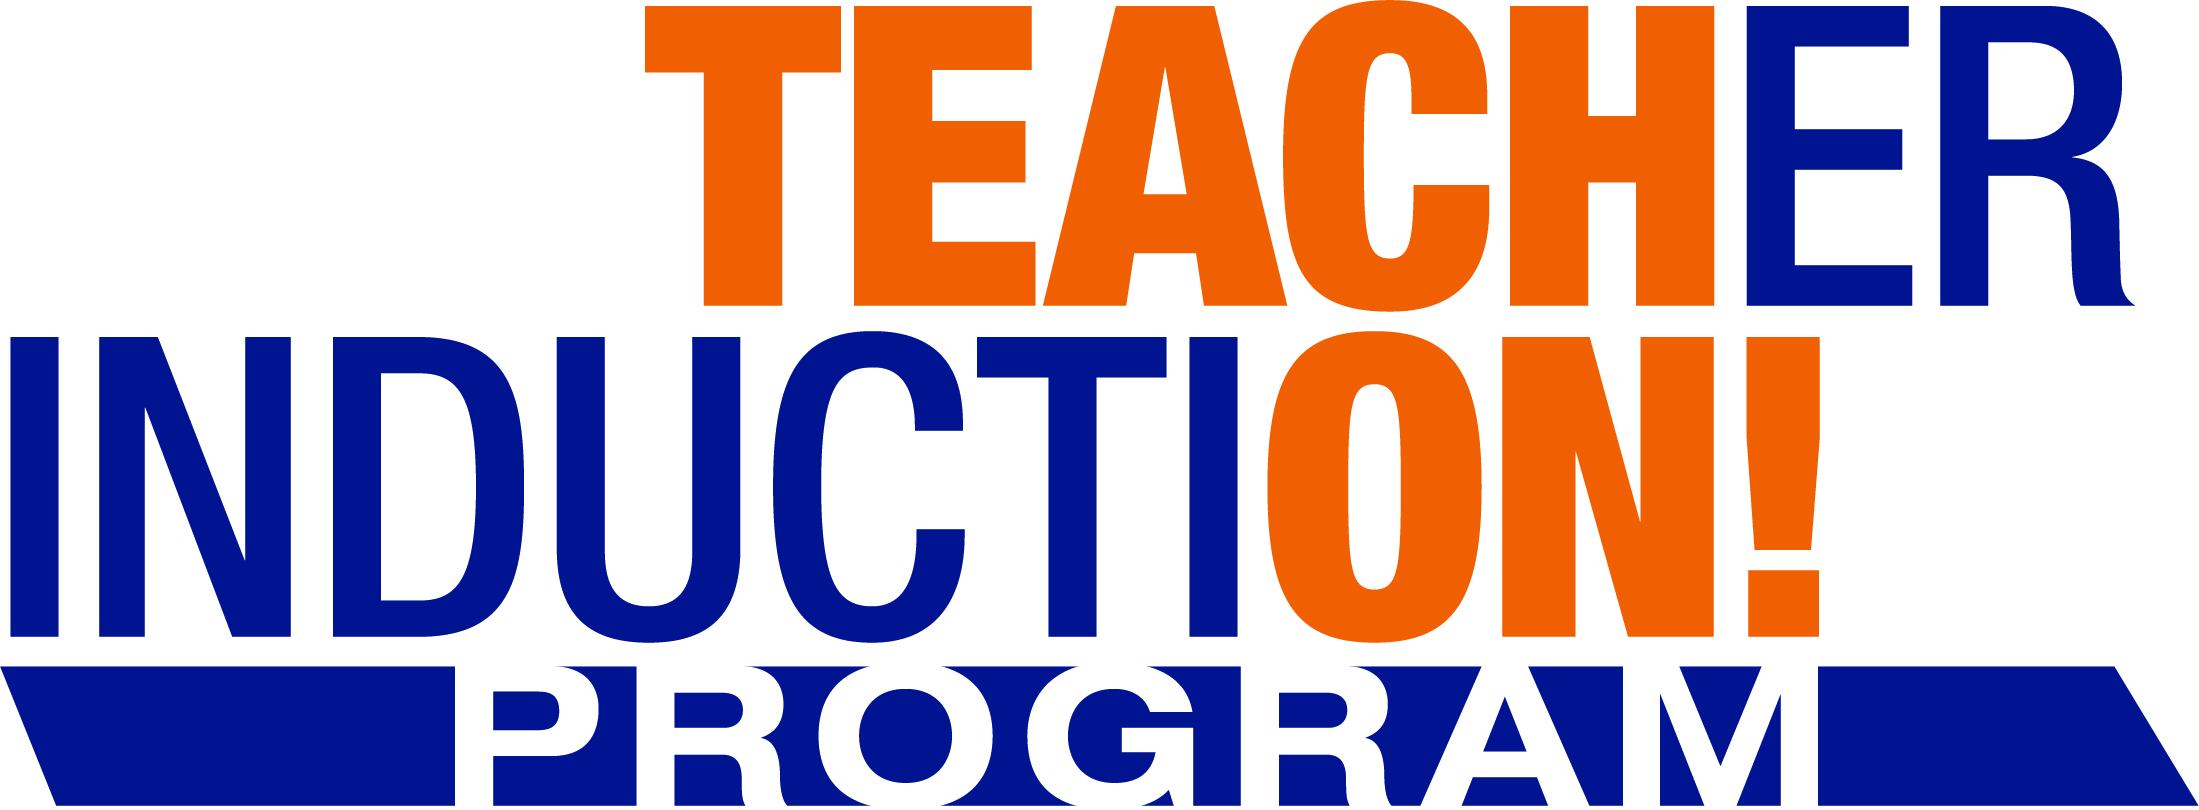 Teacher Induction Program Logo